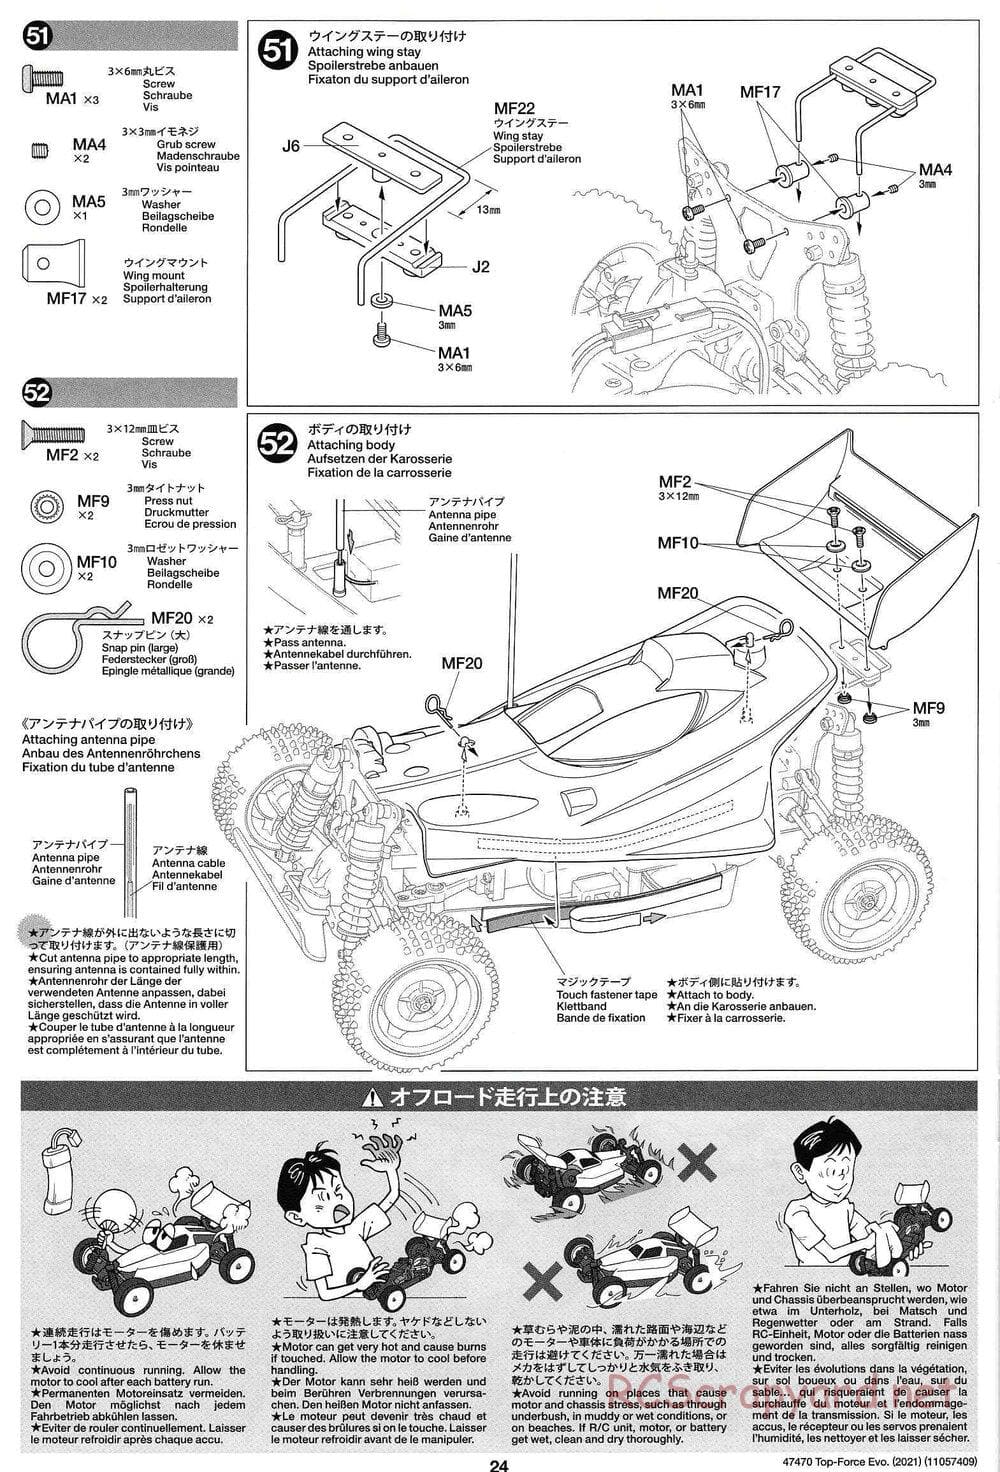 Tamiya - Top Force Evo 2021 - DF-01 Chassis - Manual - Page 24